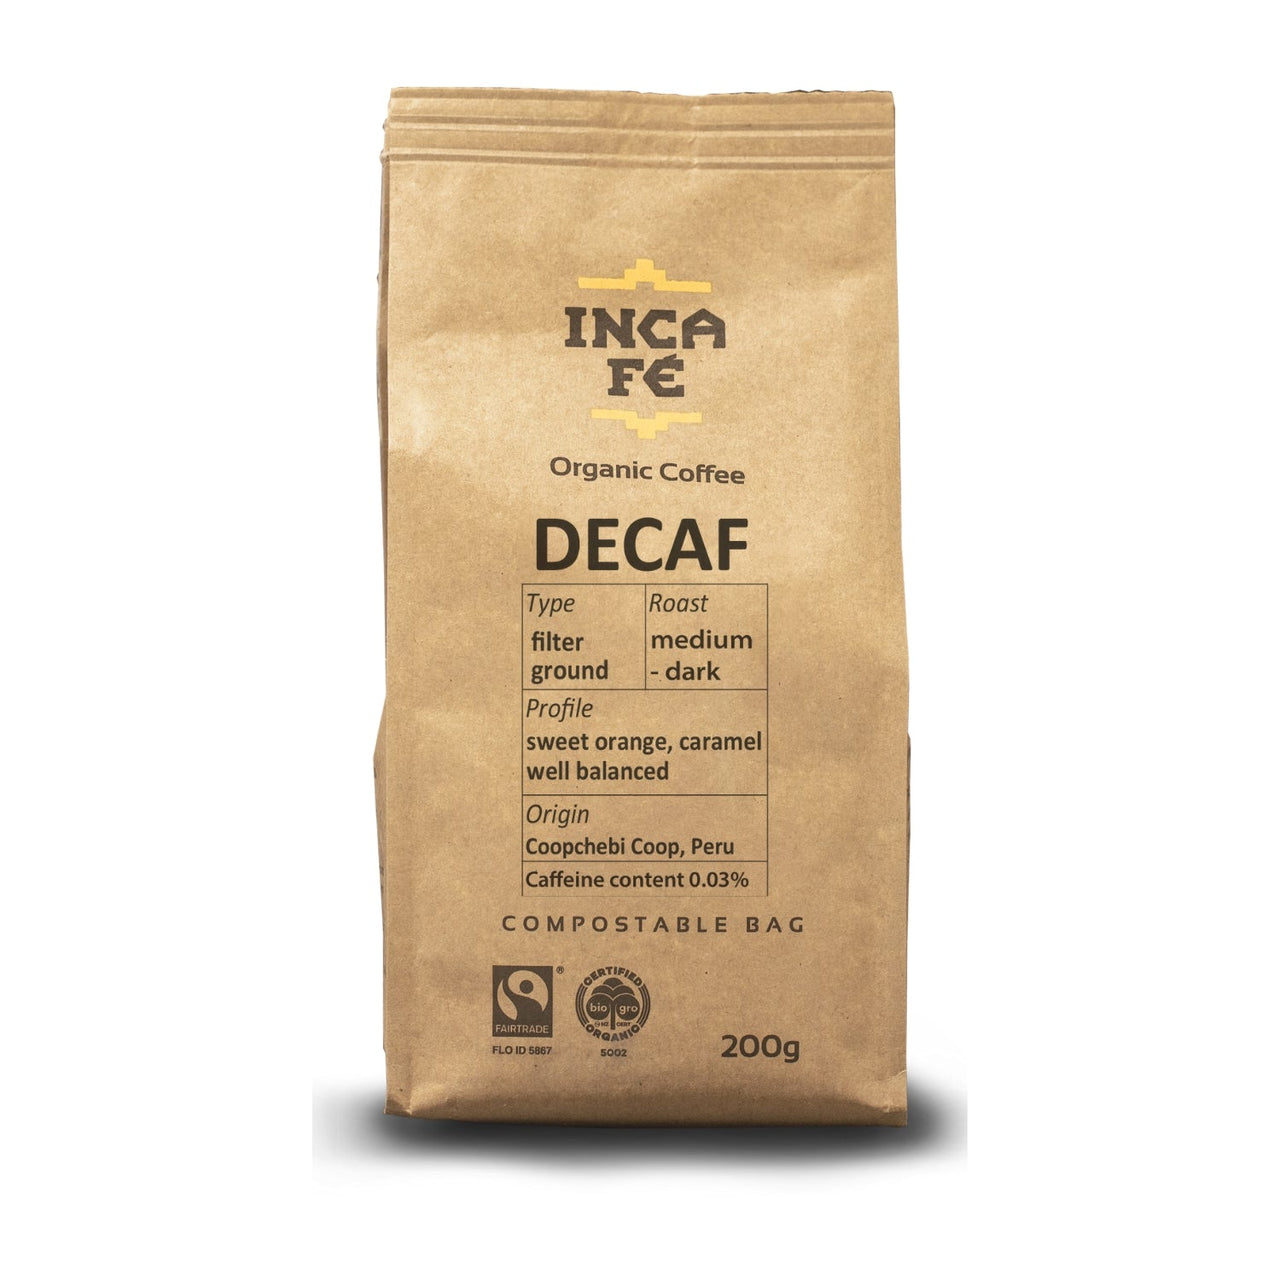 Inca Fe Coffee Decaf Filter Ground [200g]